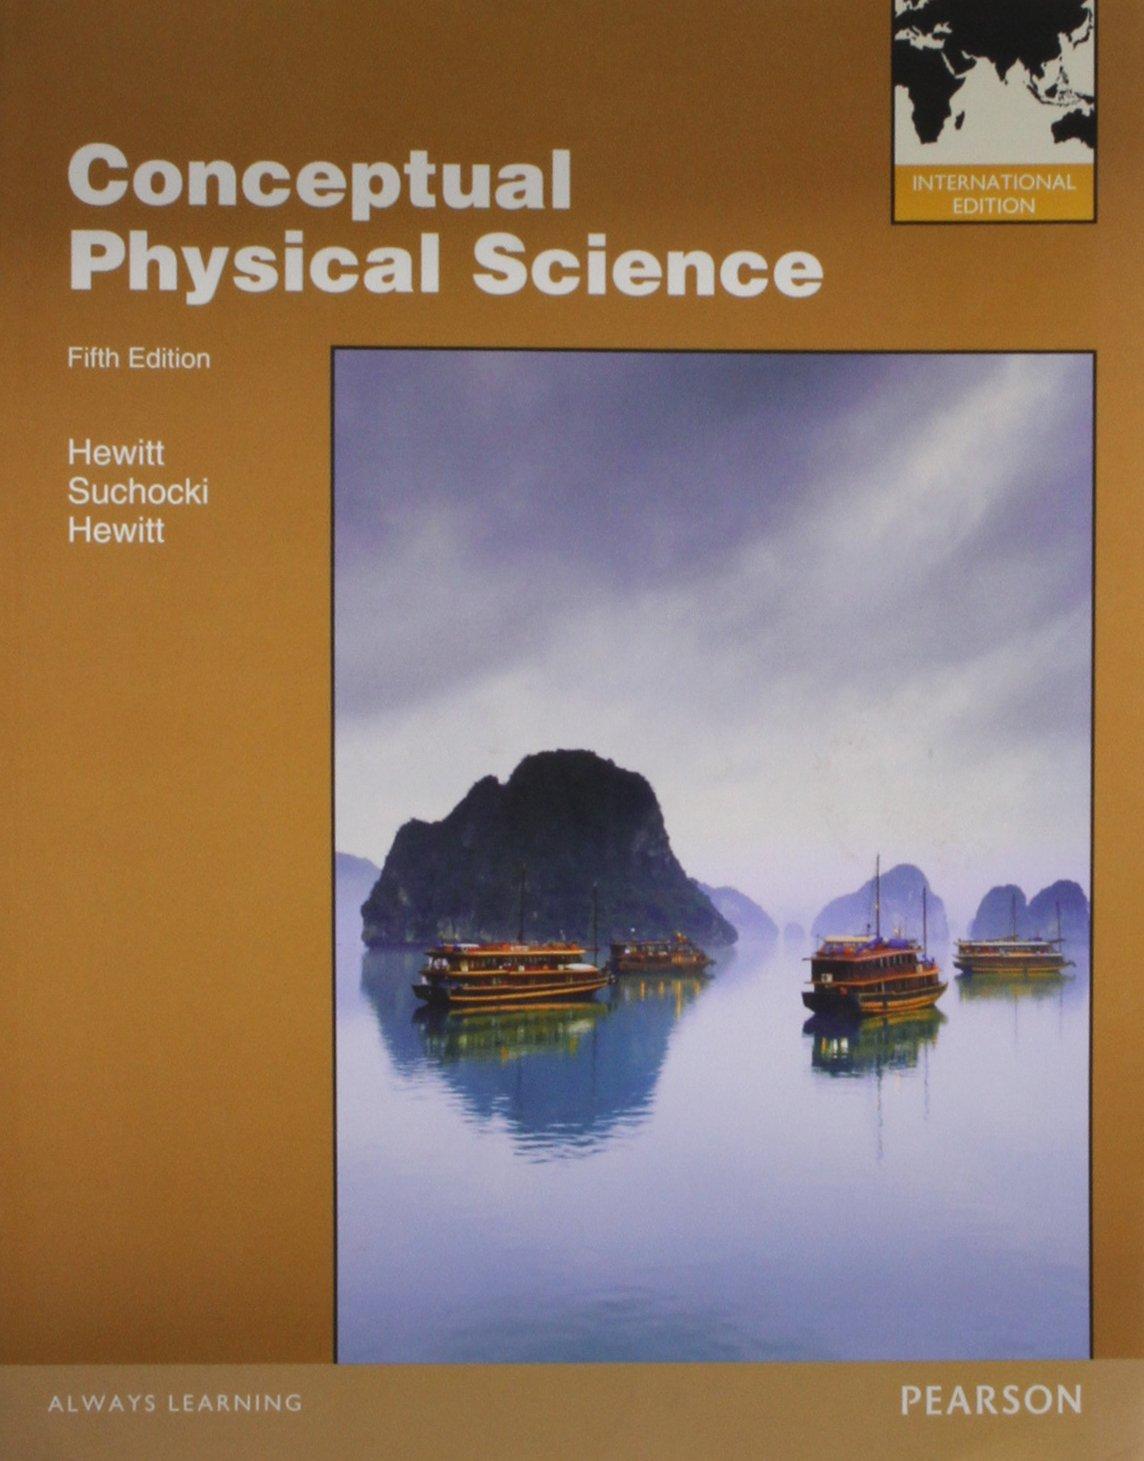 conceptual physical science international edition 5th edition international edition hewitt hewitt, suchocki